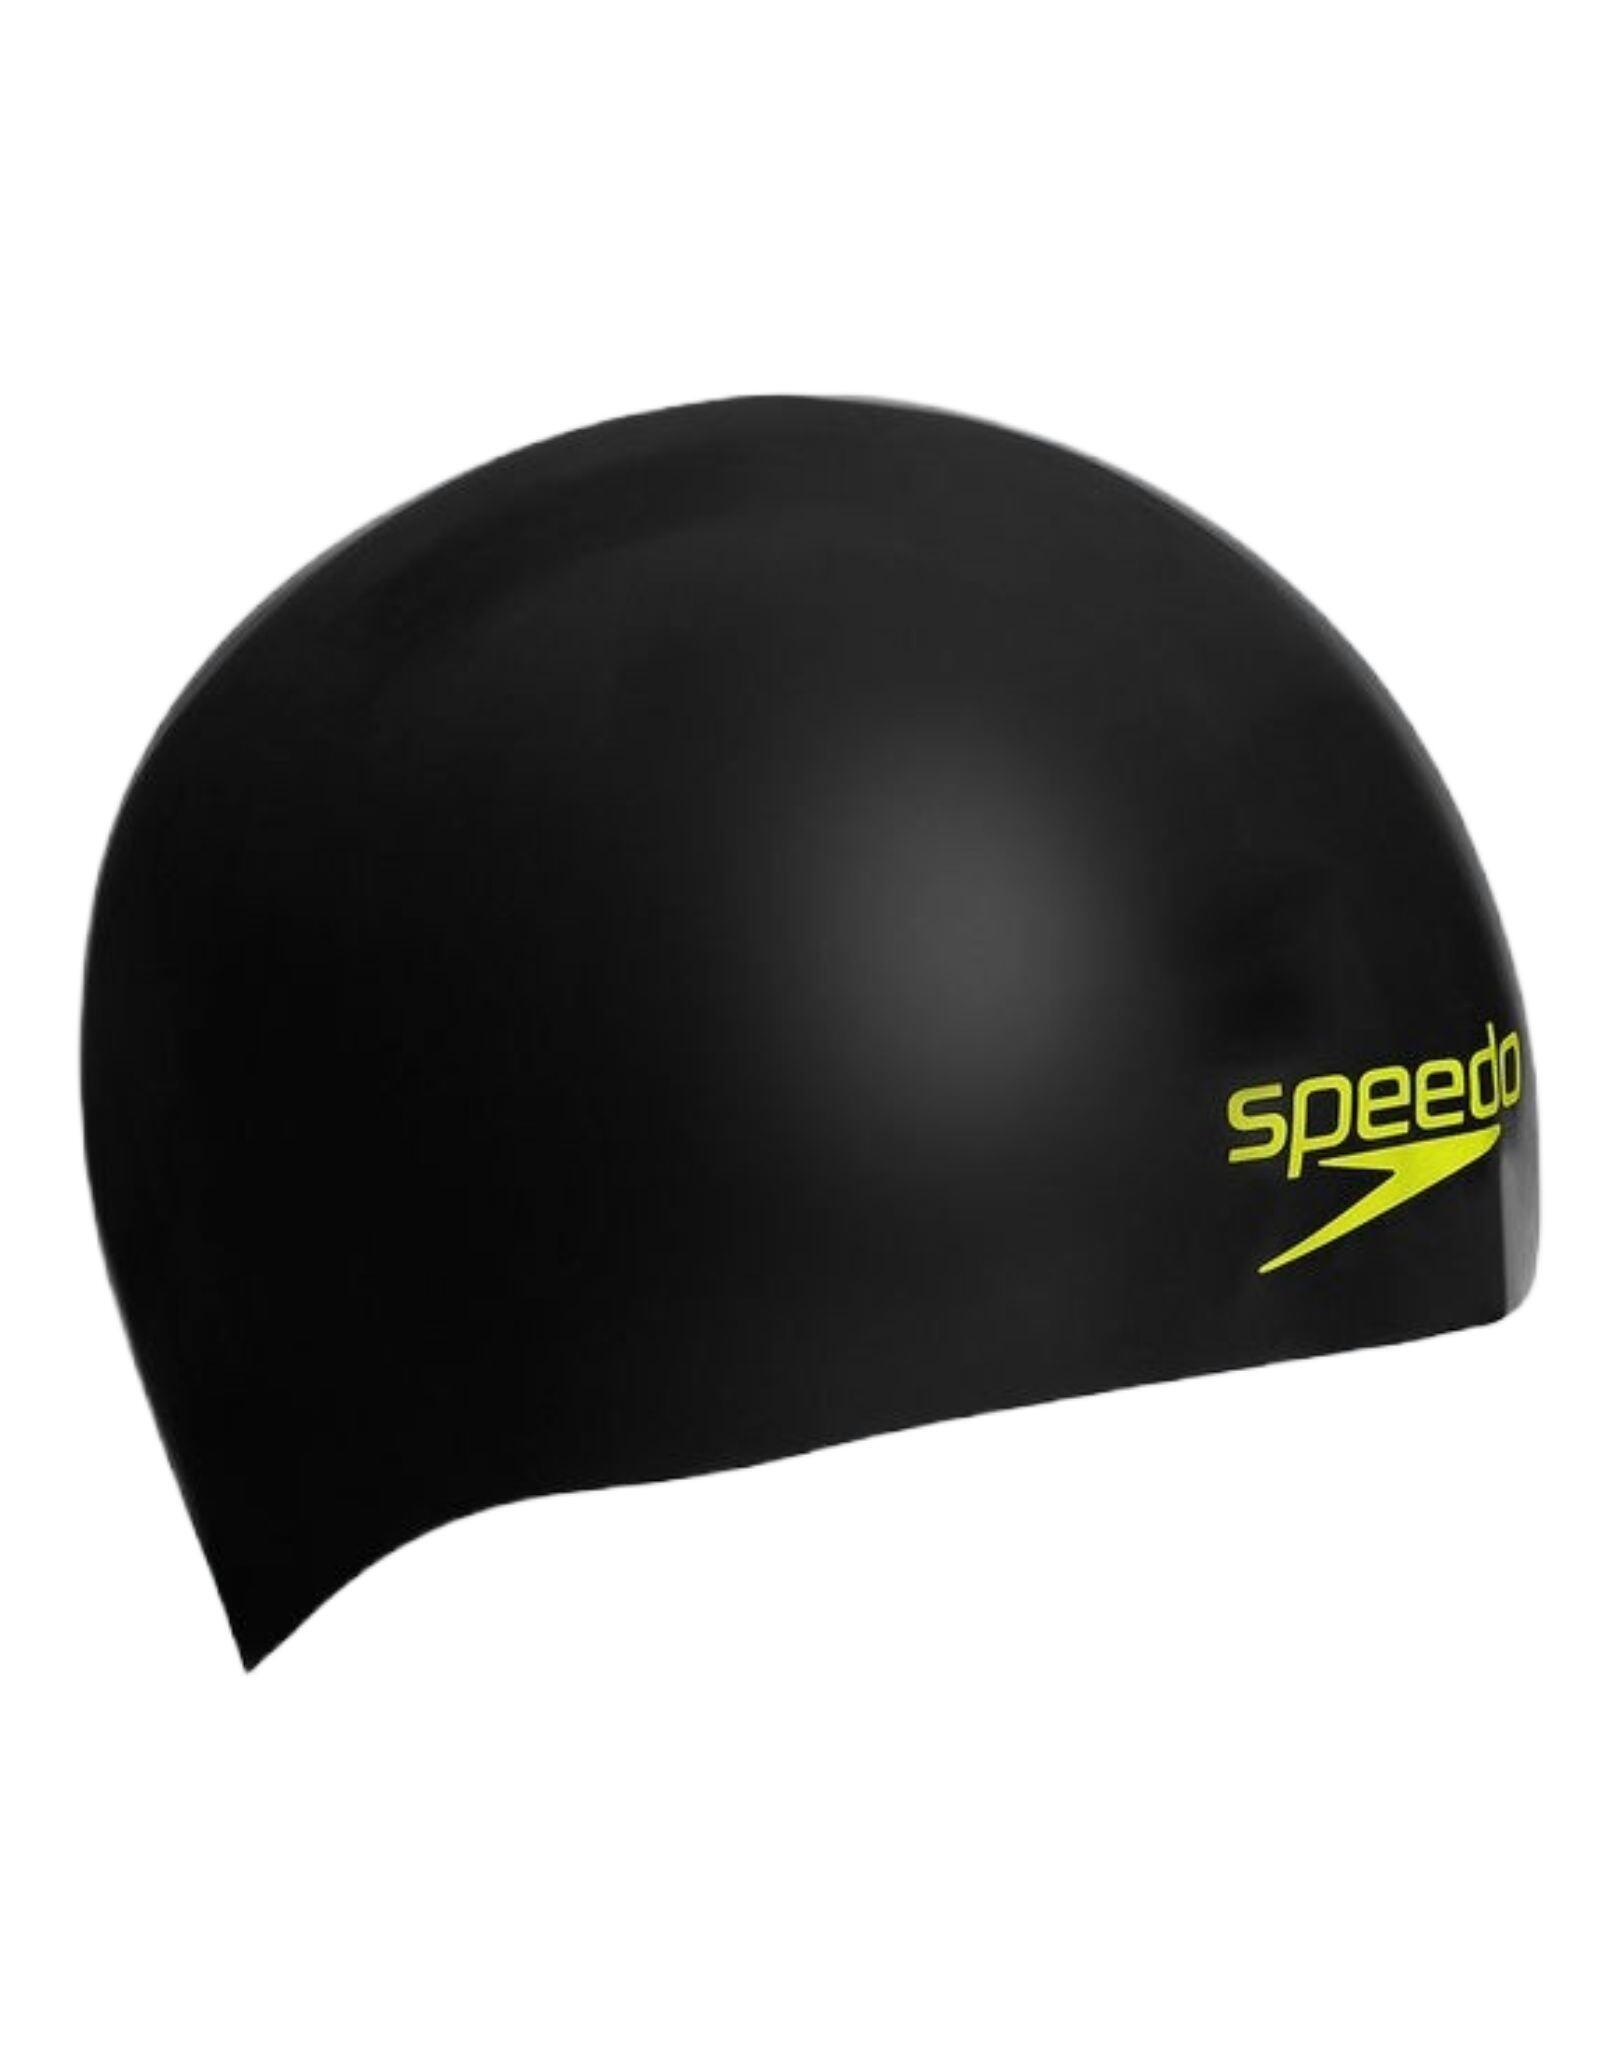 Speedo Fastskin Racing Cap - Black/Yellow 1/1